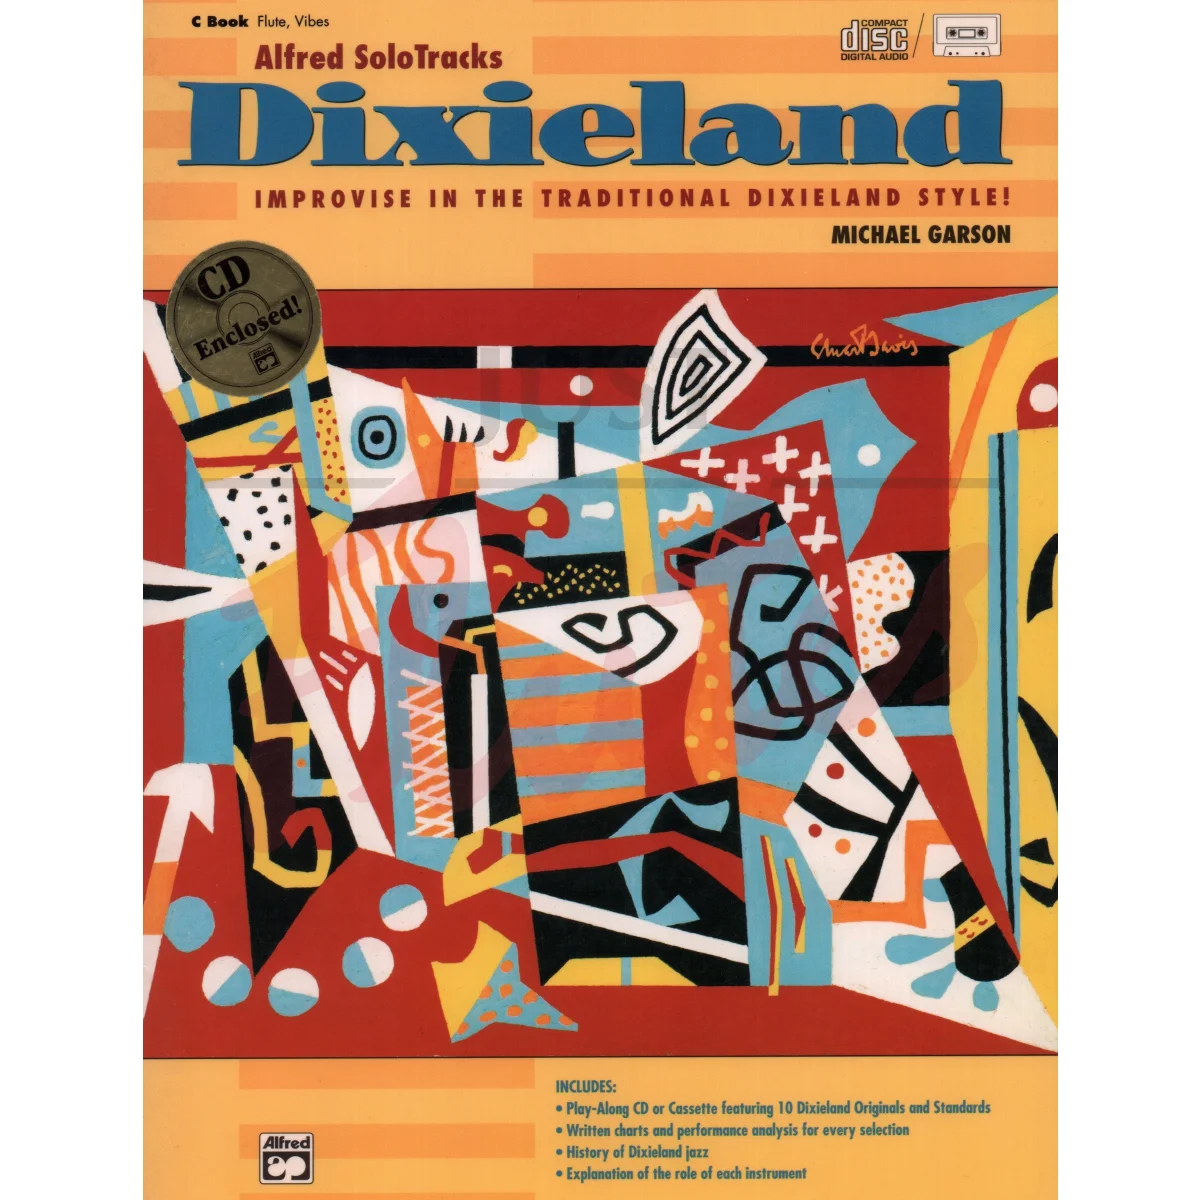 Alfred SoloTracks - Dixieland for Flute